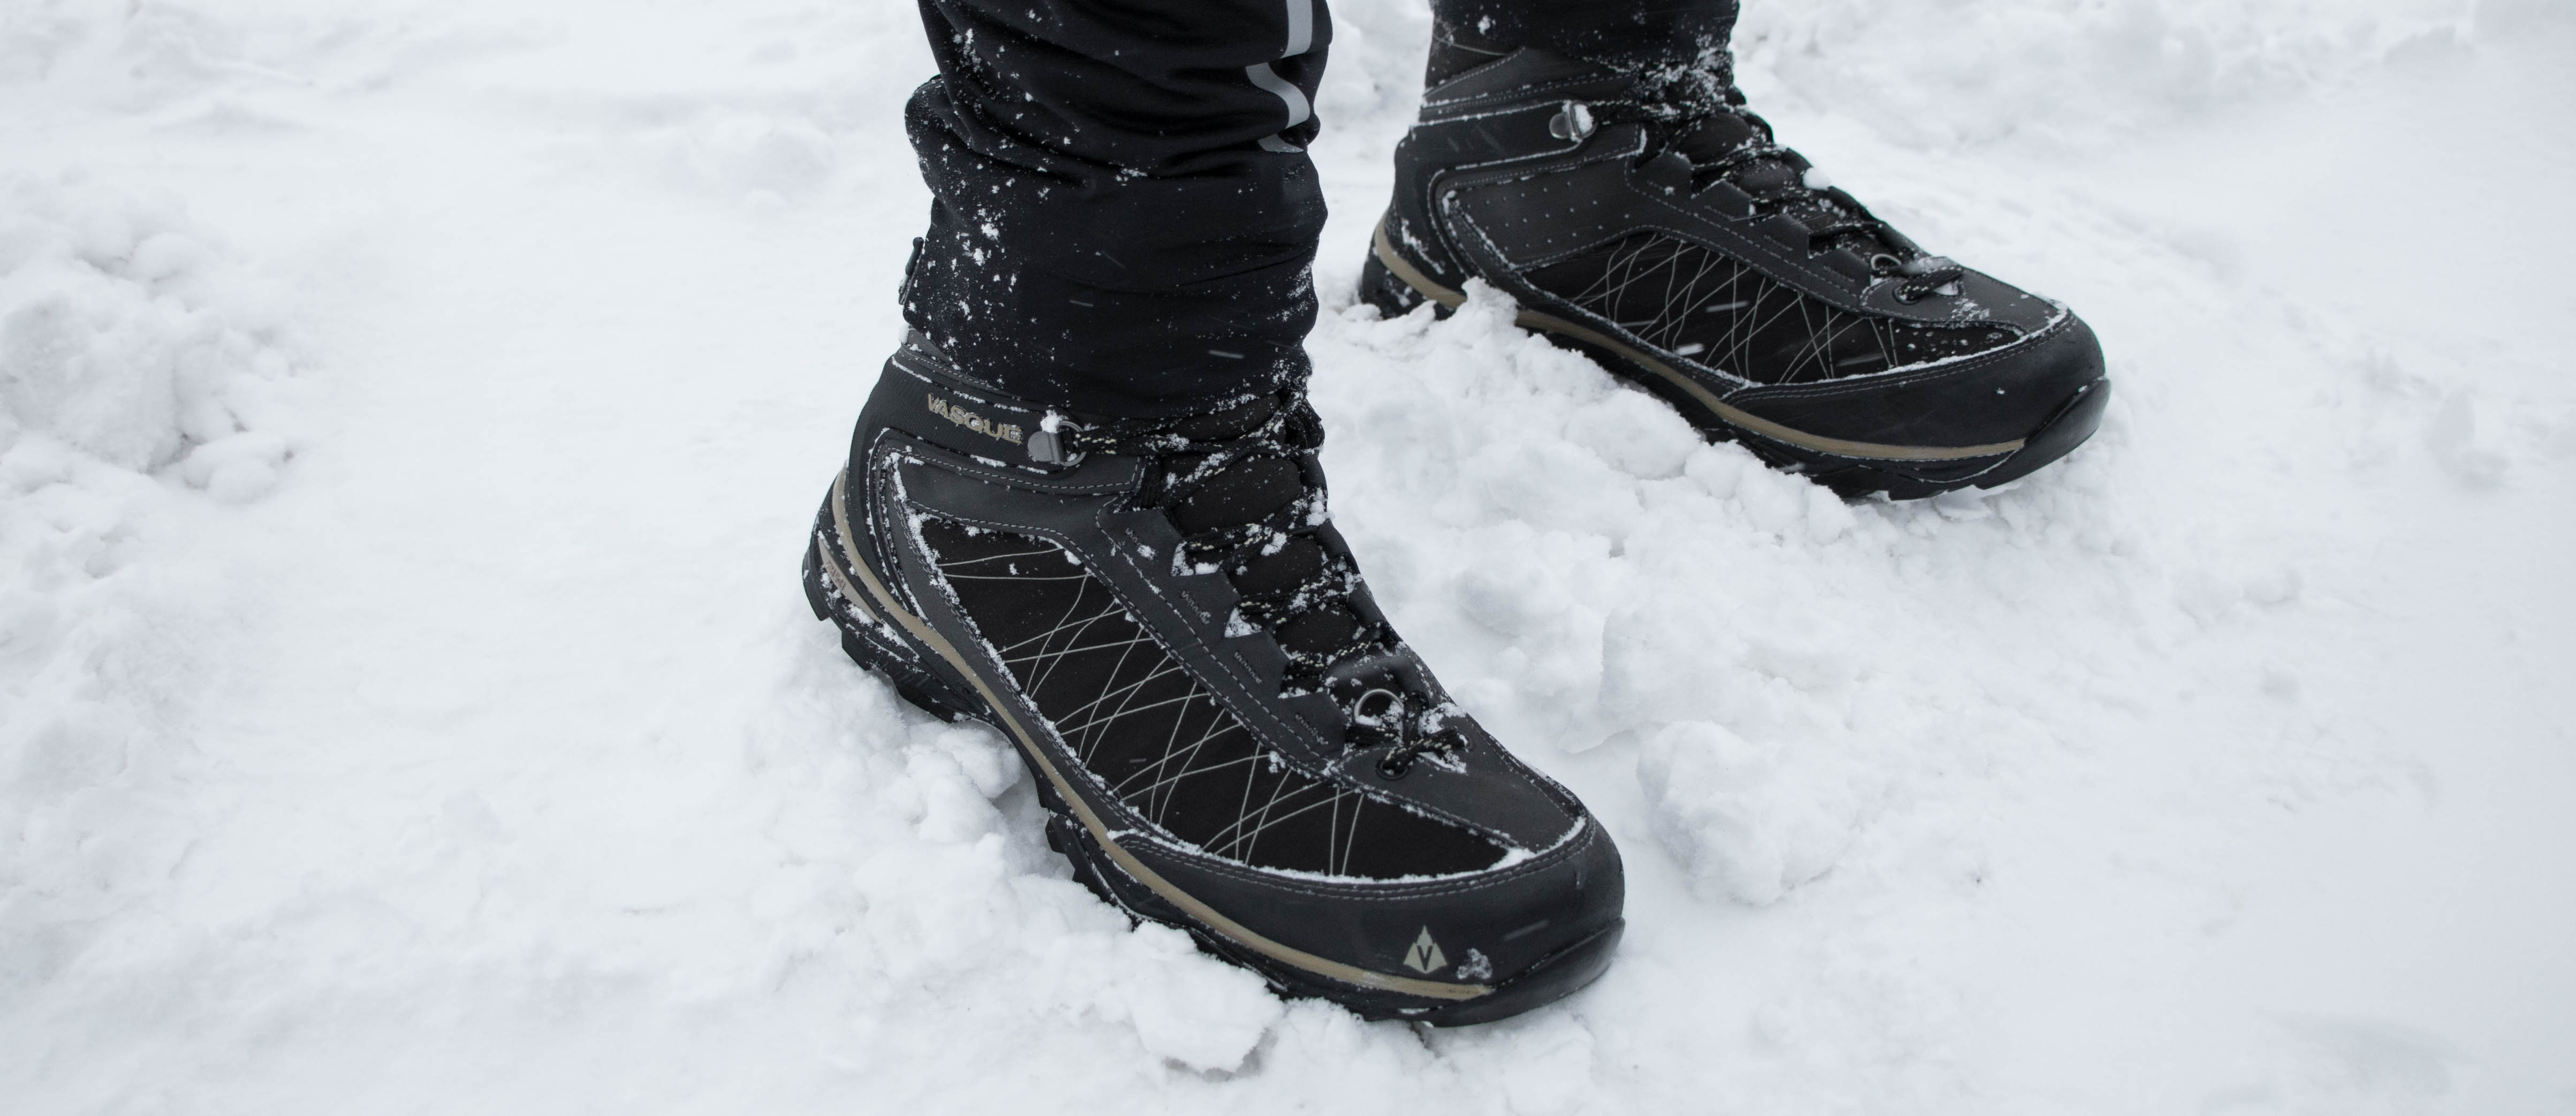 vasque men's coldspark ultradry snow boot